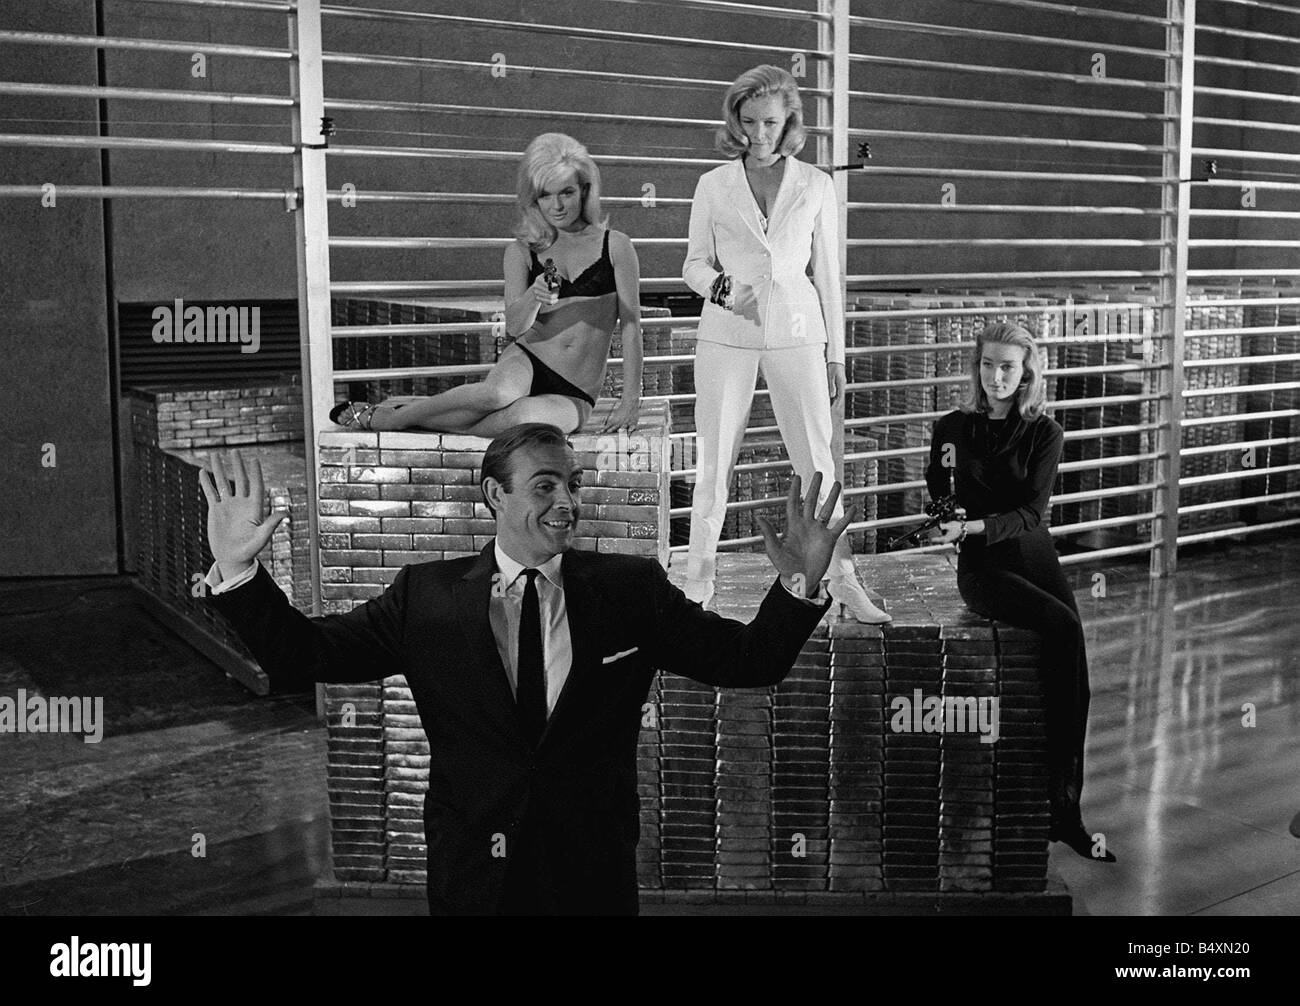 film-goldfinger-1964-sean-connery-as-james-bond-007-poses-with-bond-B4XN20.jpg